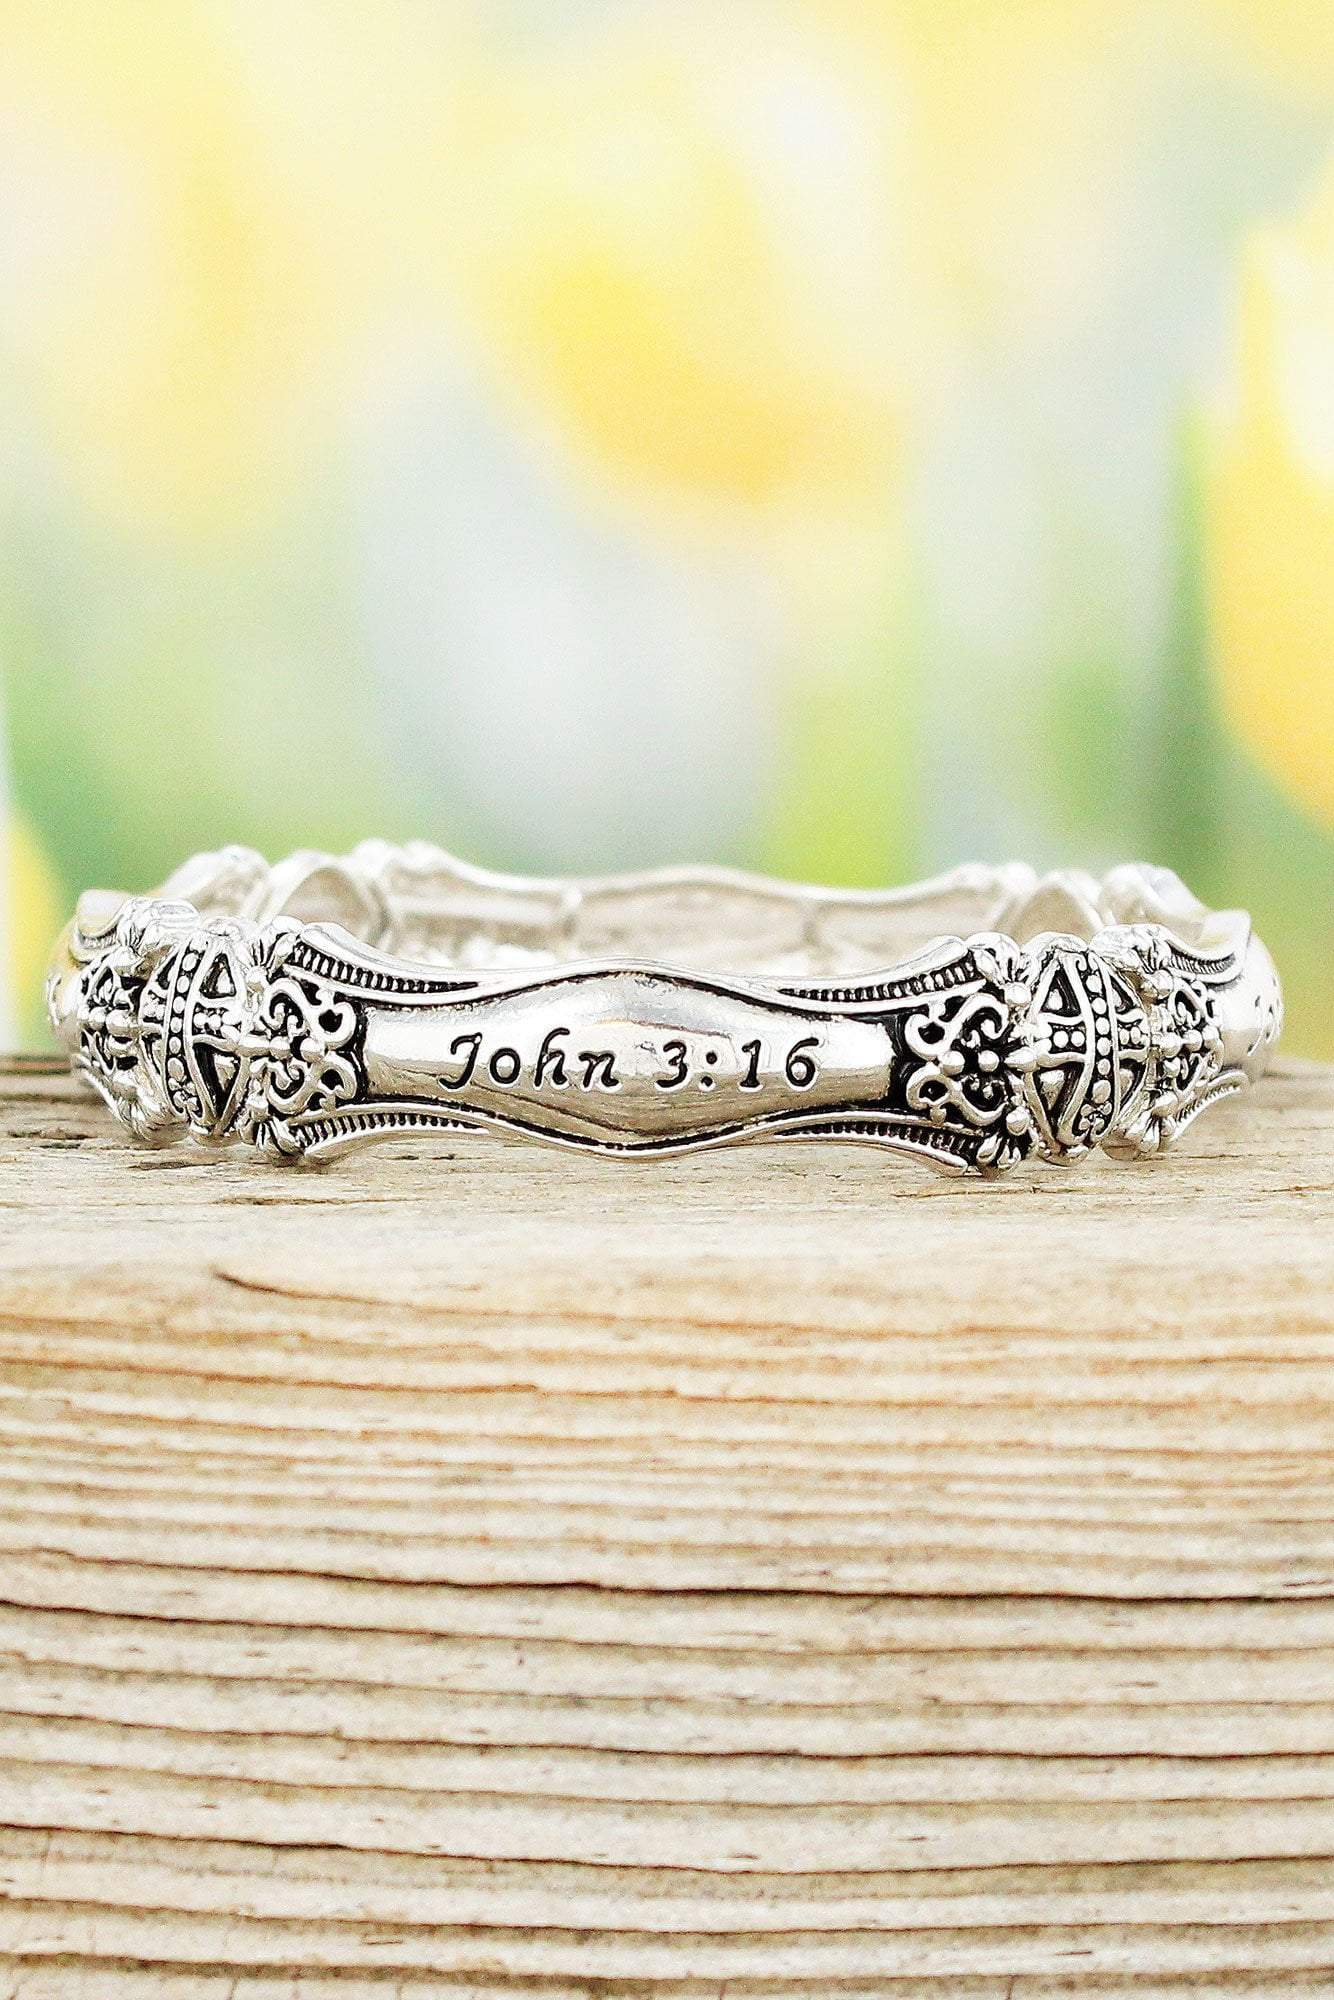 John 3:16 Antique Bracelet